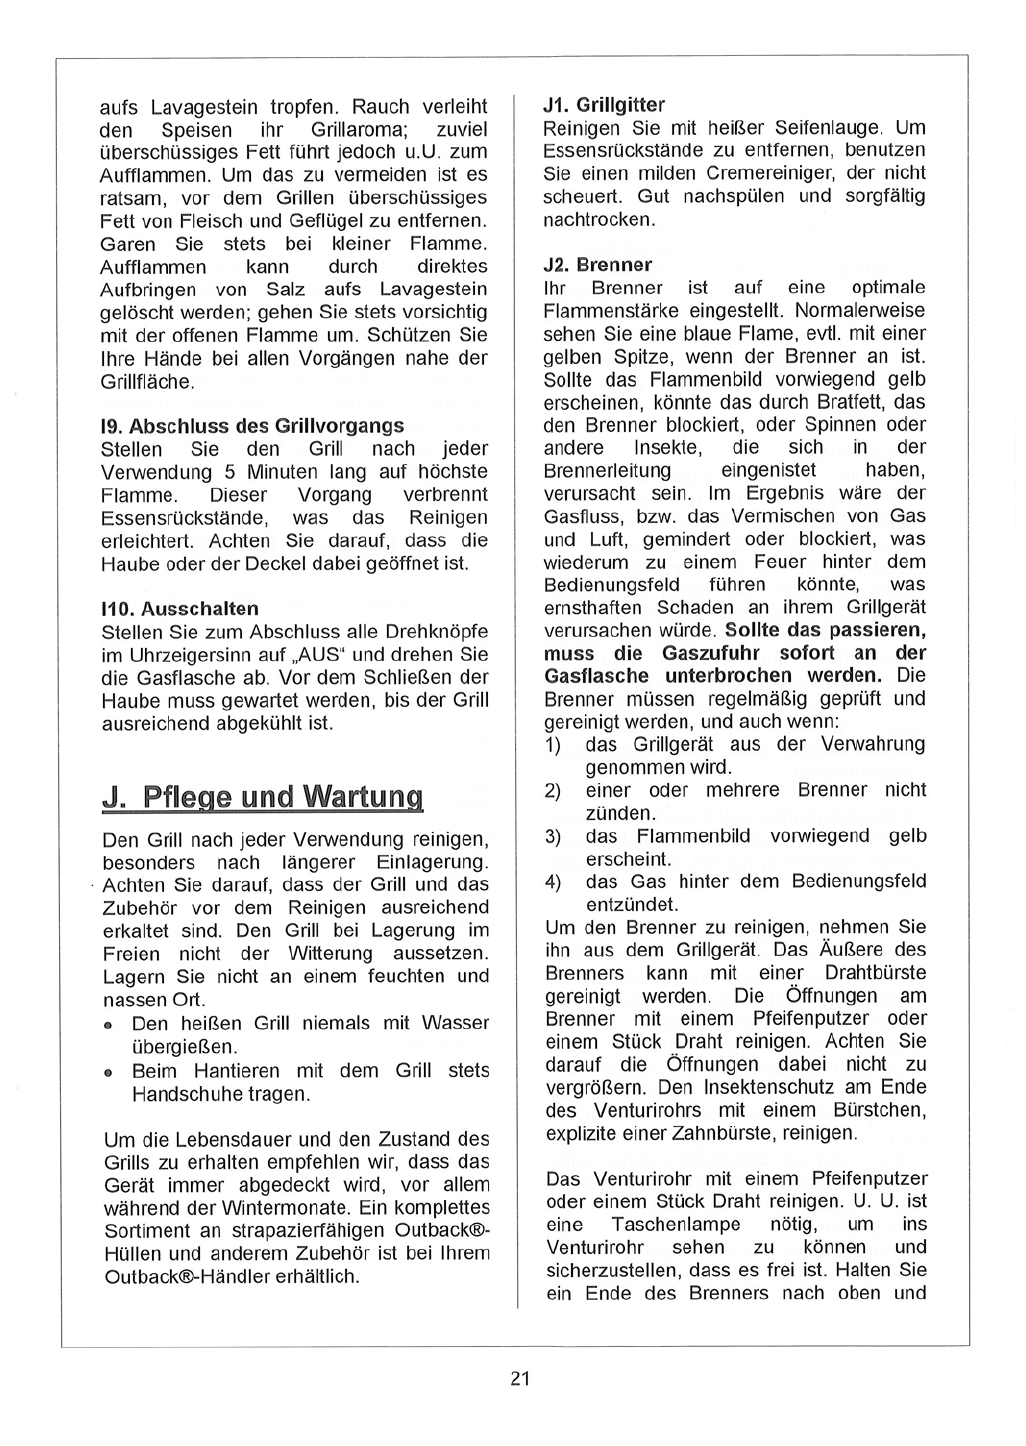 Manual Sonnenkonig Excel 200 Page 21 Of 23 German